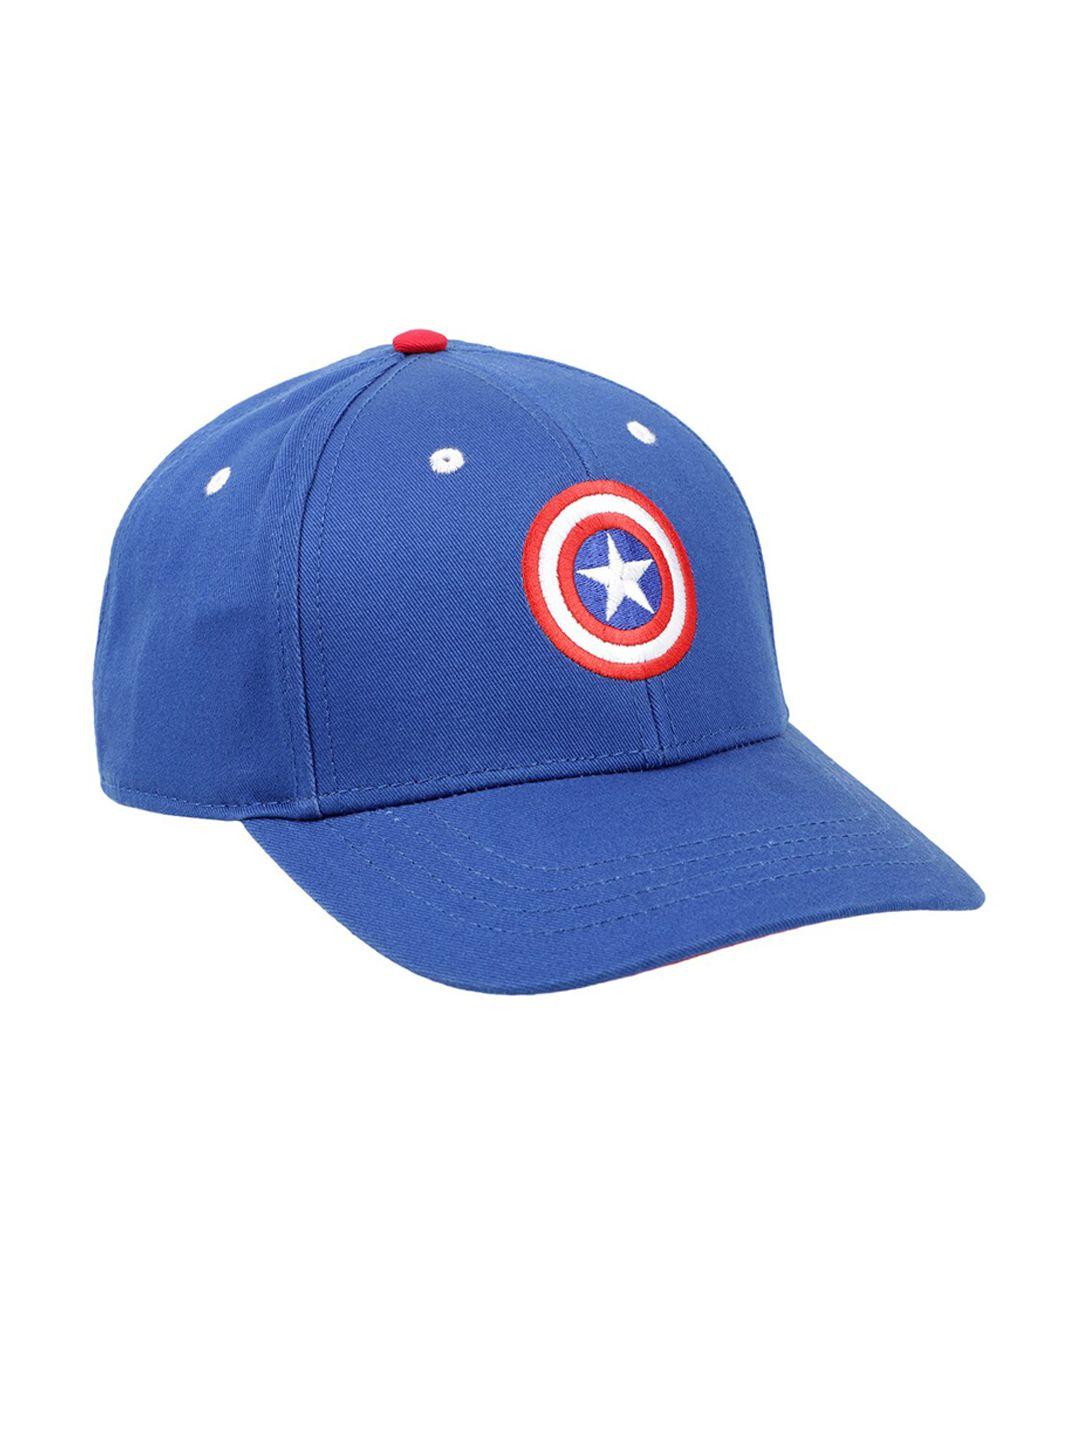 free authority men blue & white captain america embroidered baseball cap